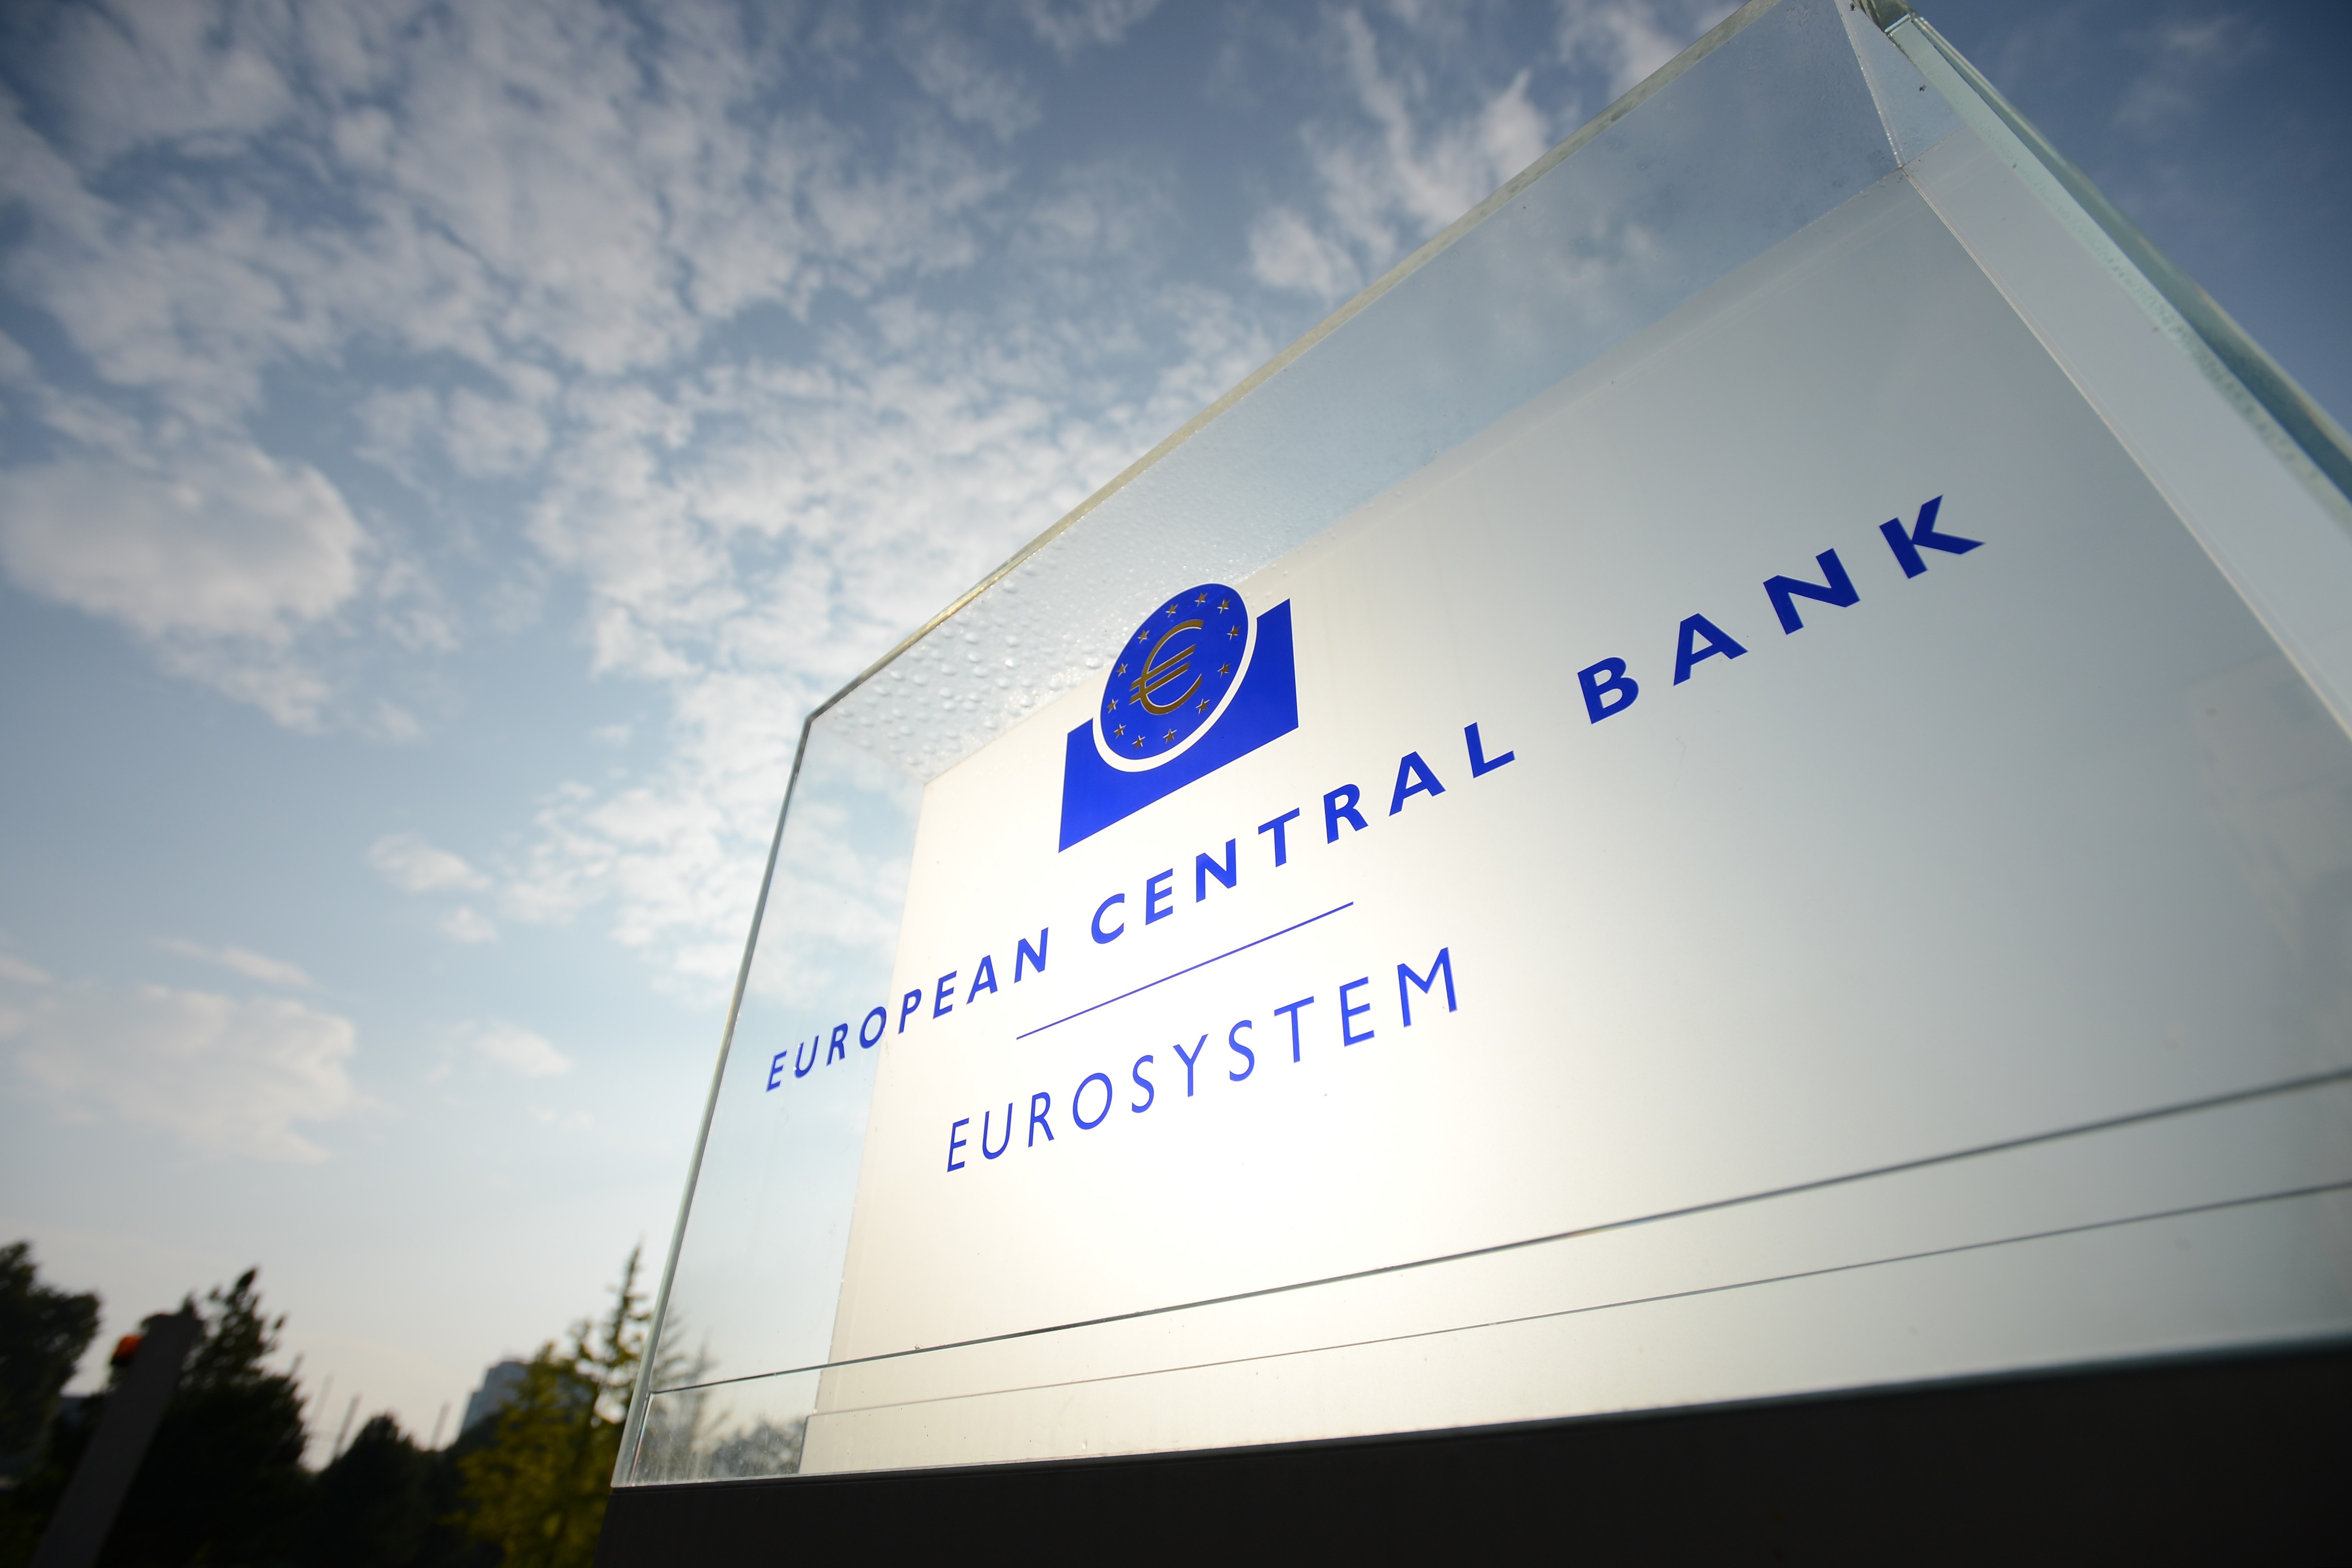 European central bank. Европейский банк. Европейский Центральный банк. Европейские банки. Центральные банки Европы.